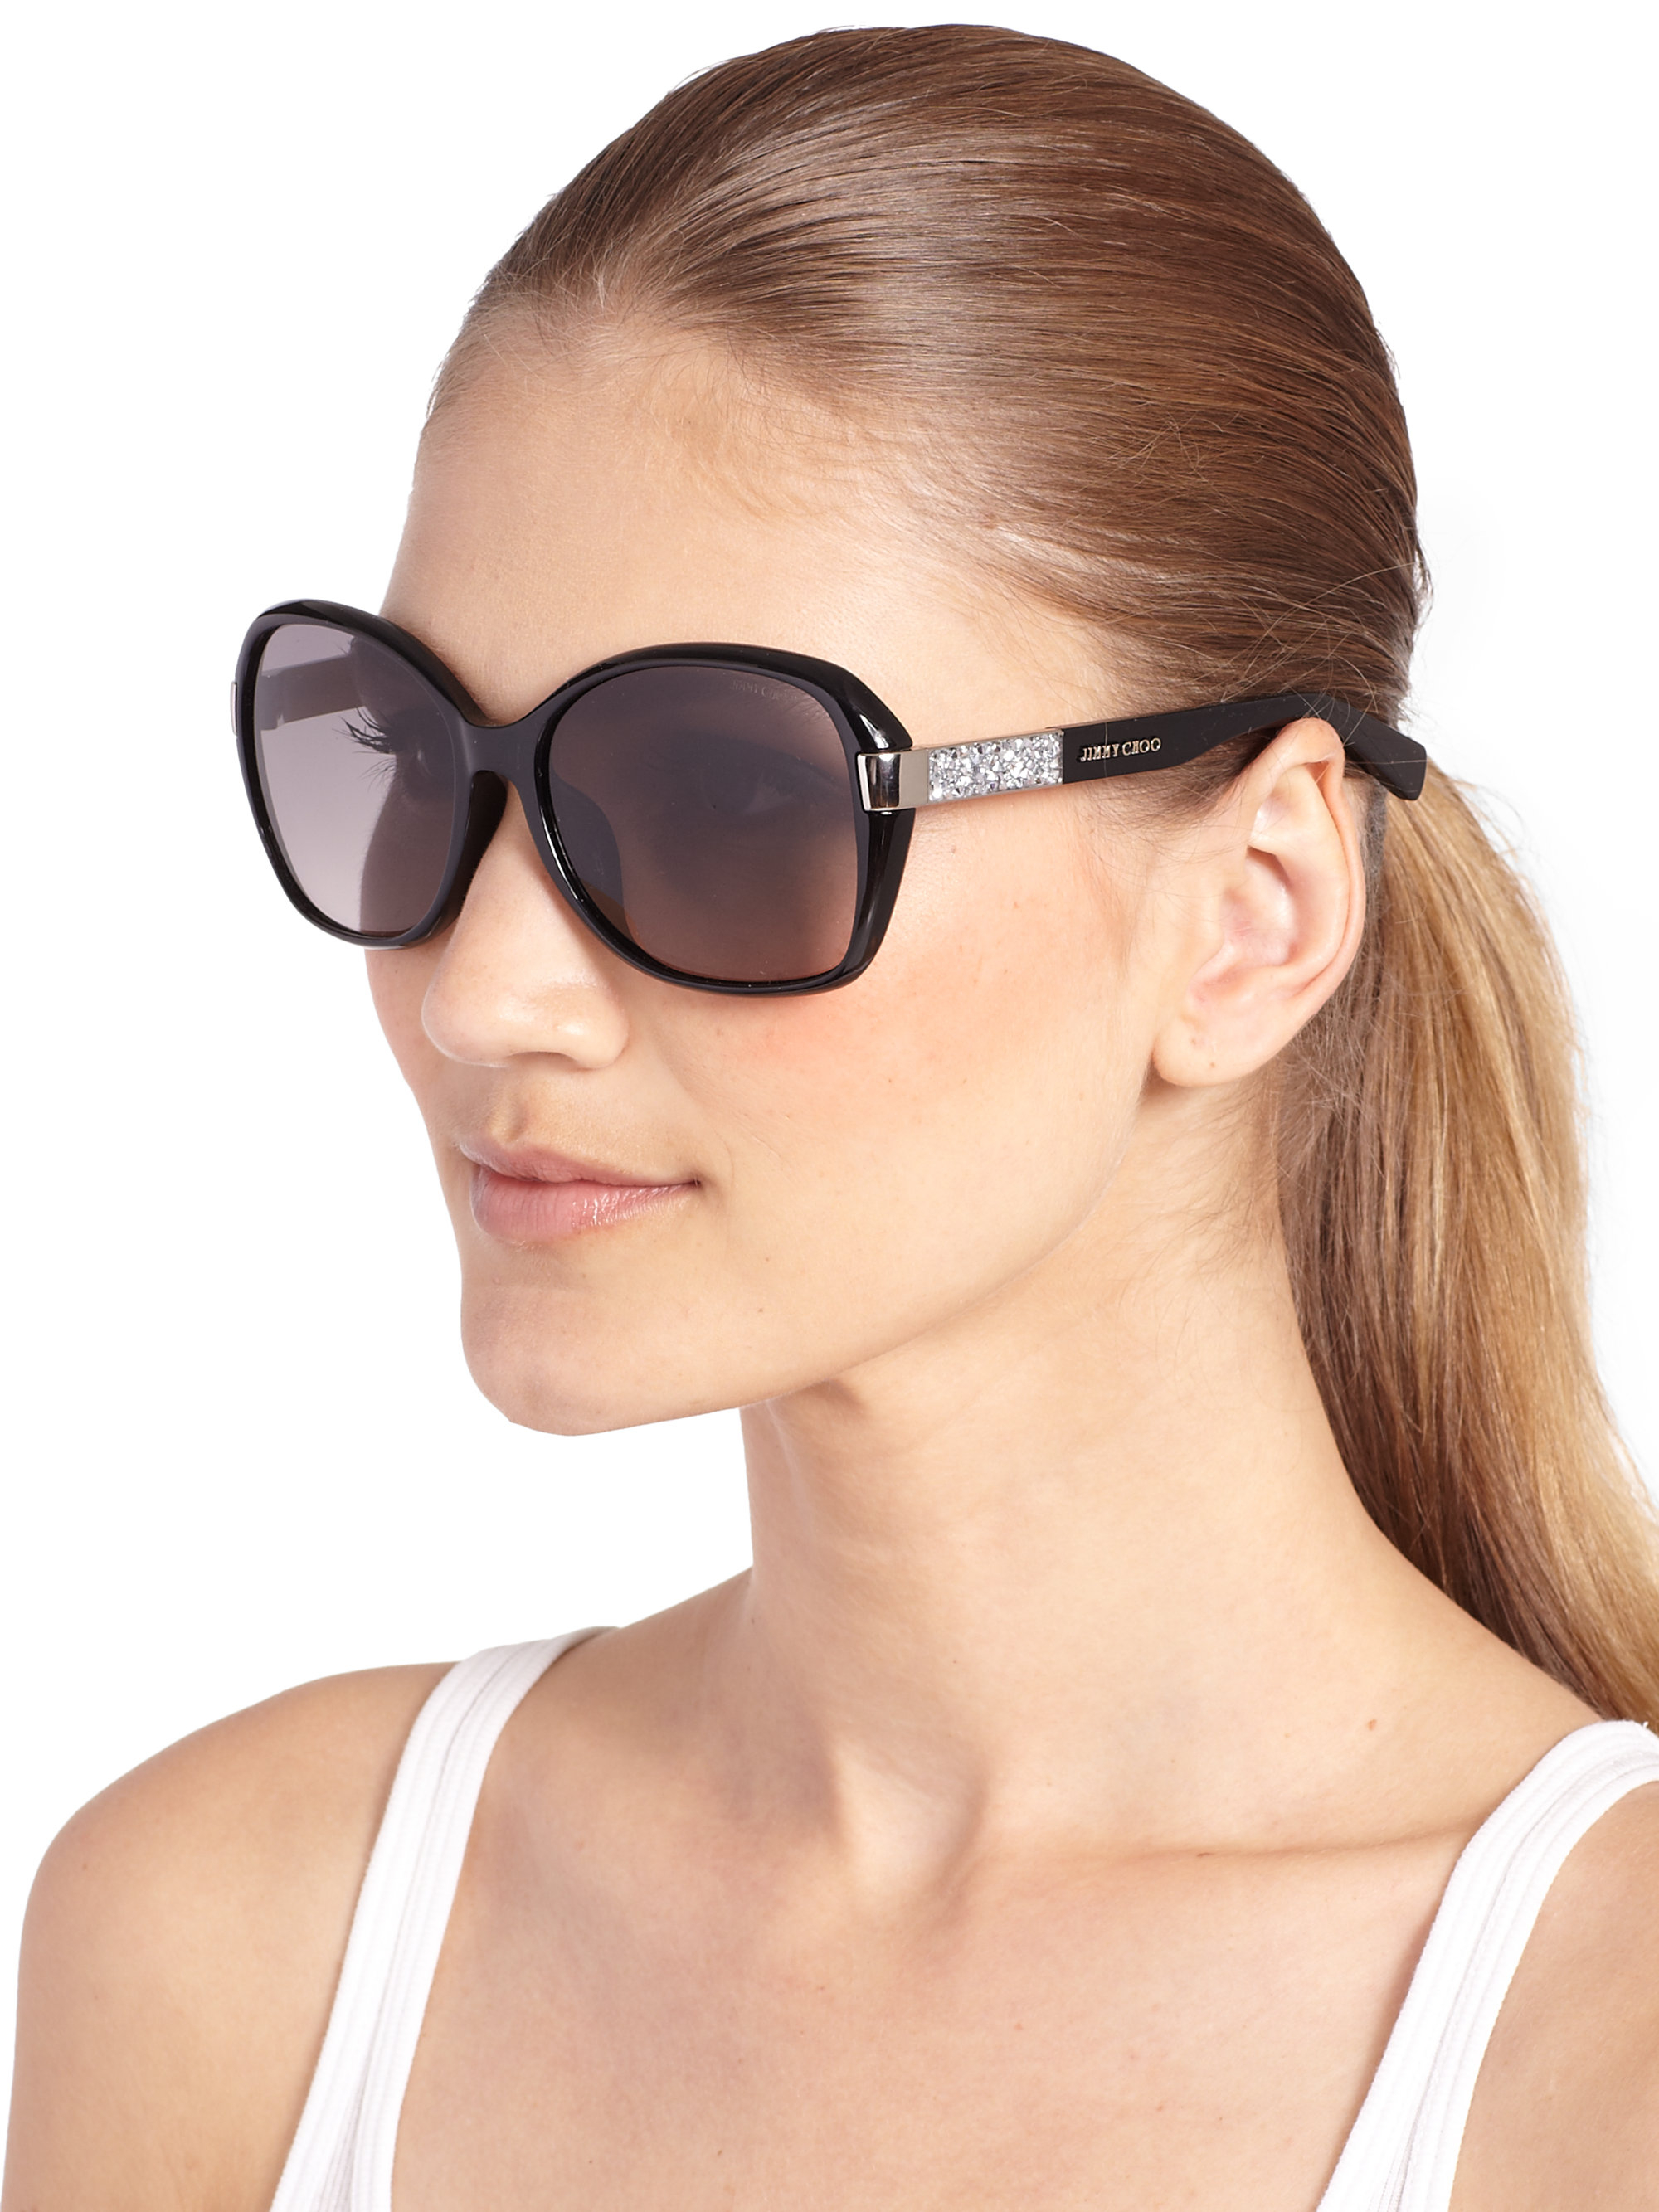 jimmy choo aviator sunglasses with rhinestones